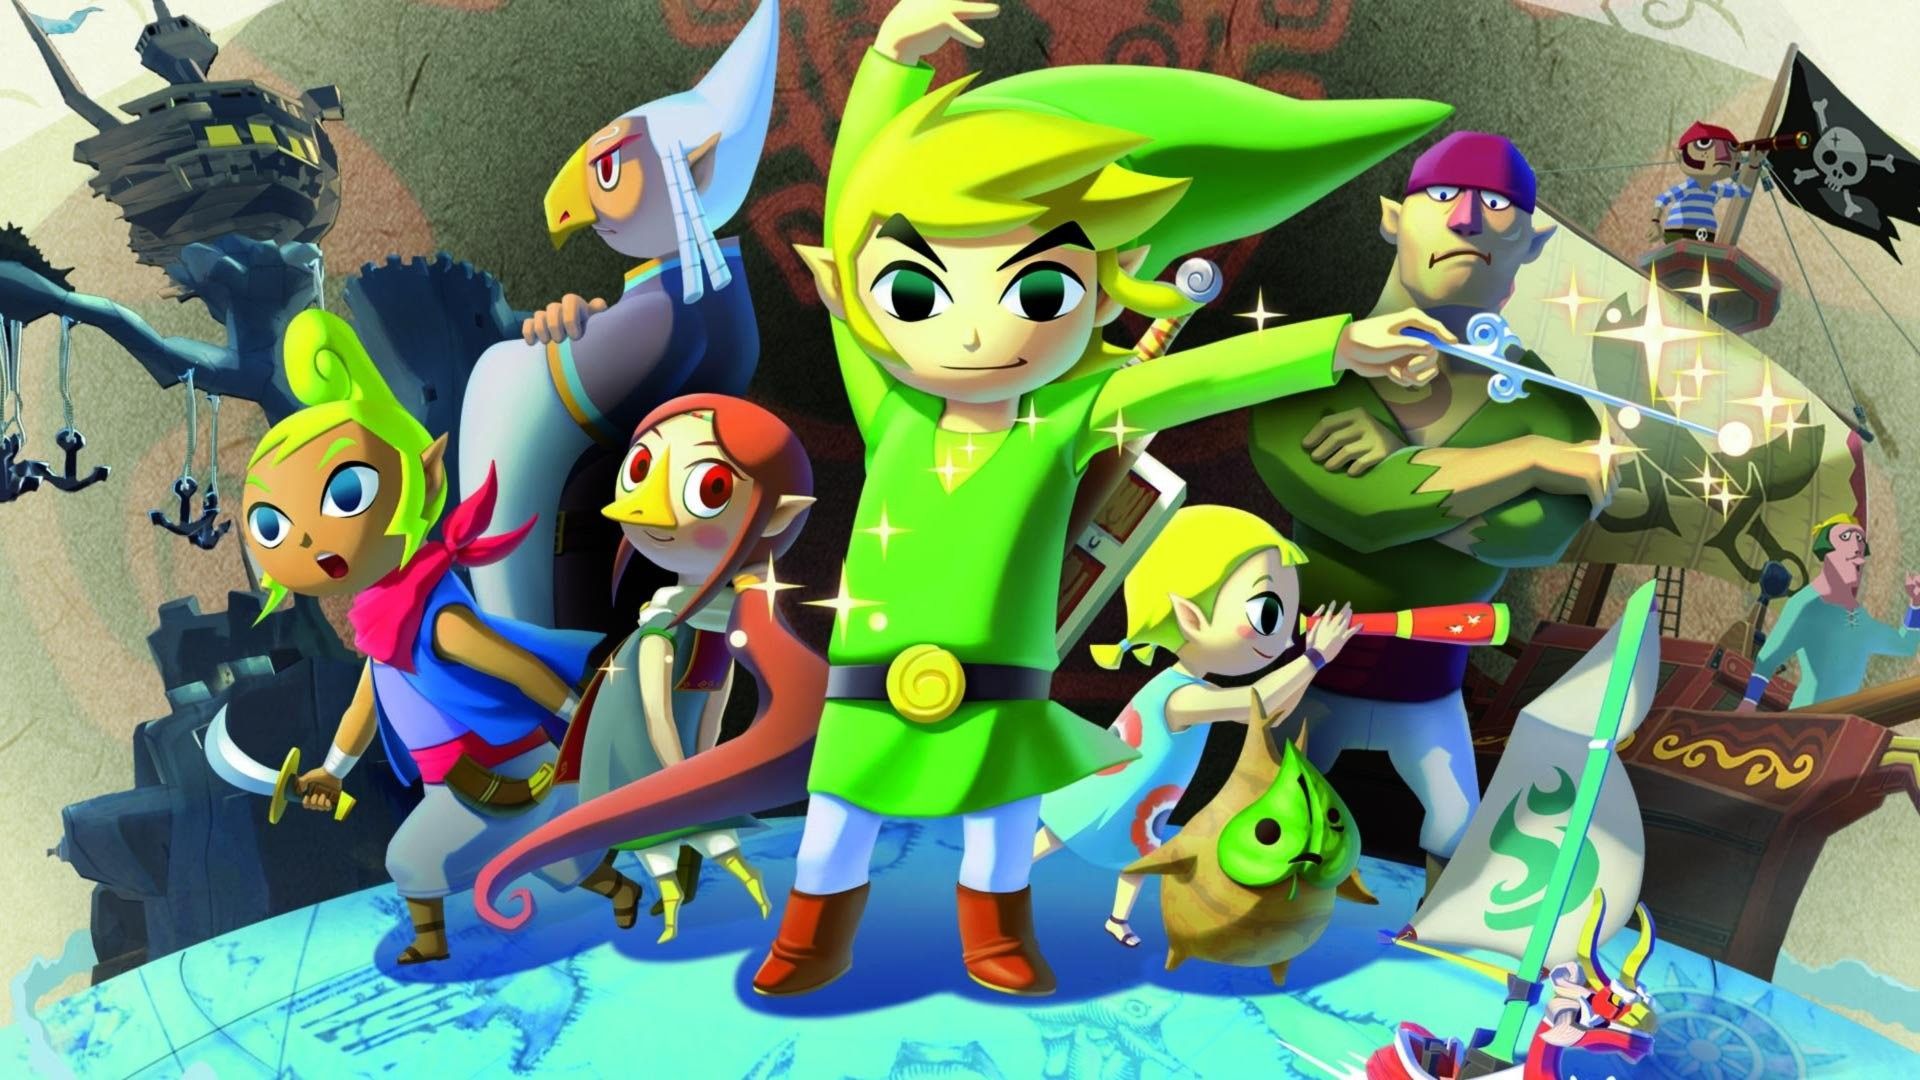 Legend of Zelda: Wind Waker originally had Link play theremin